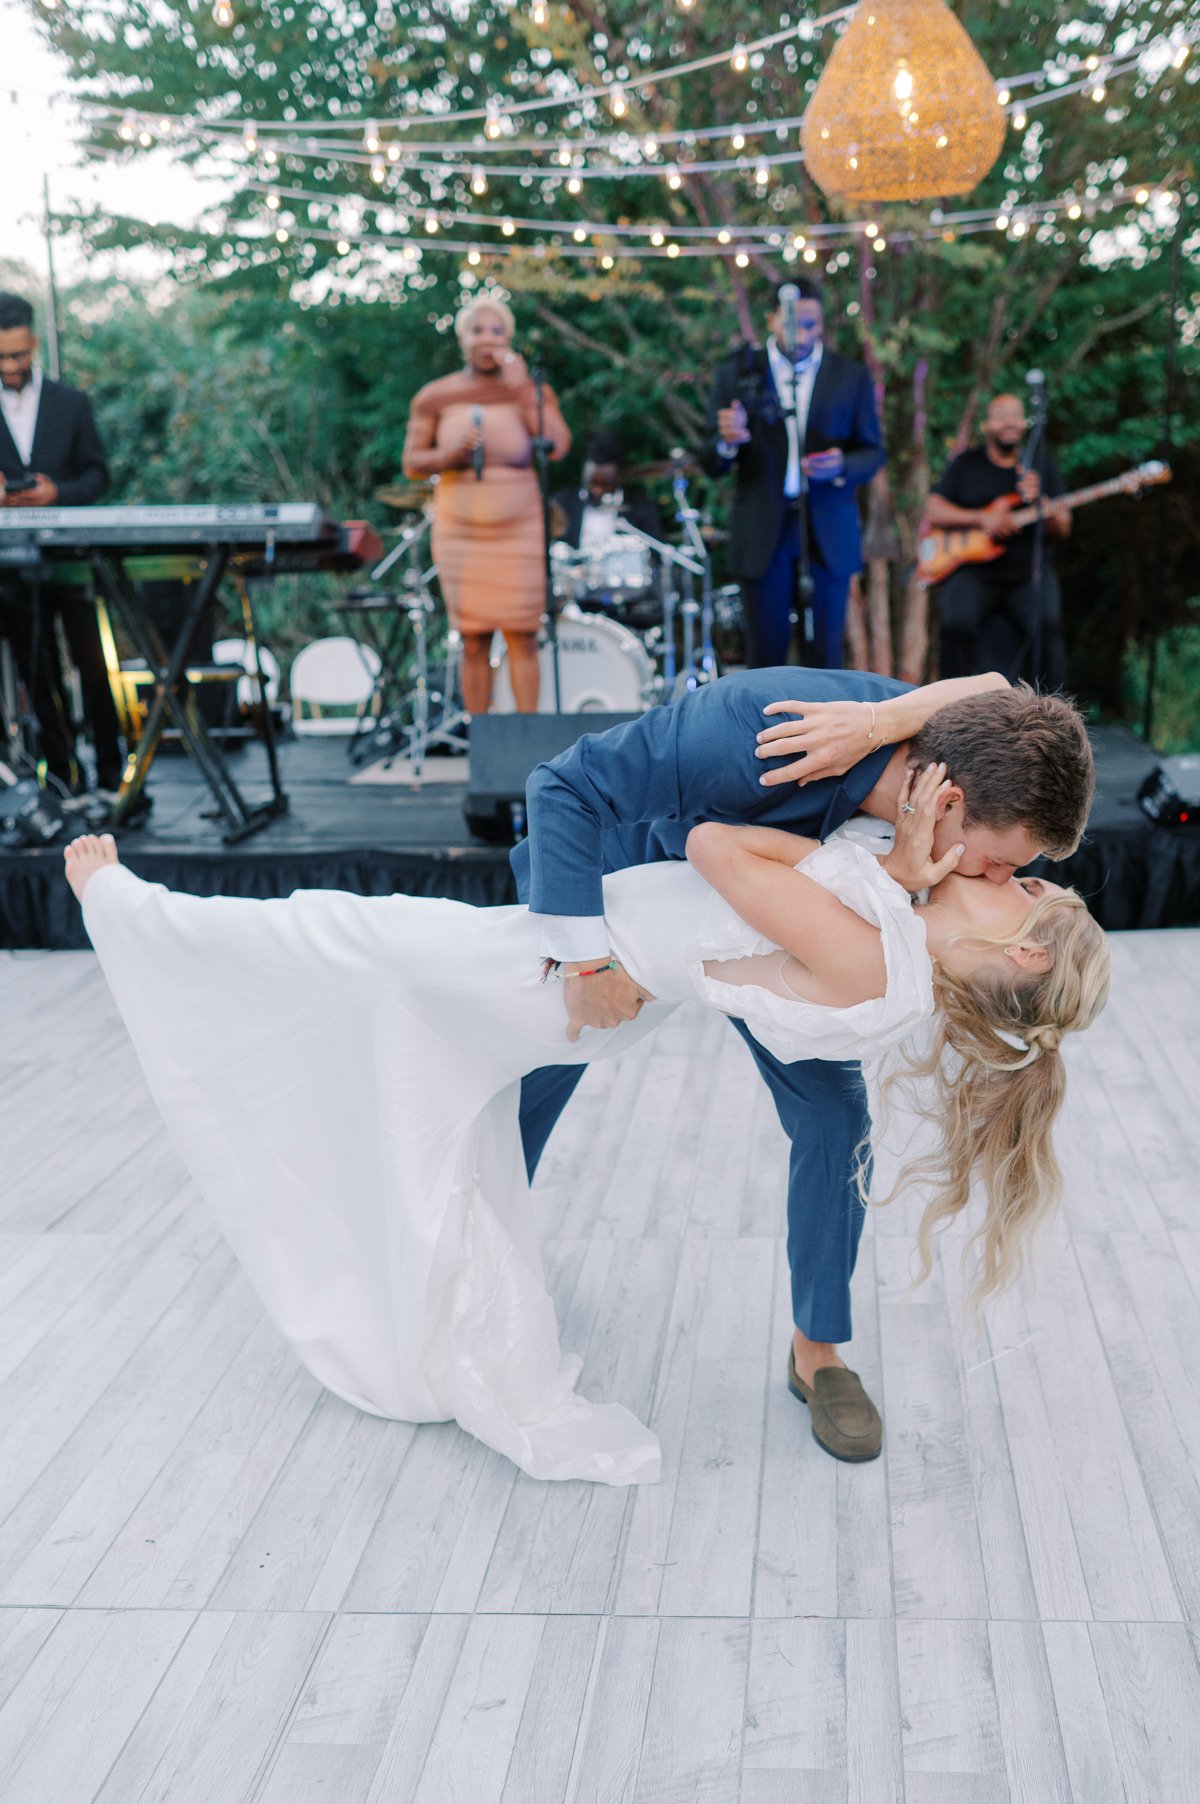 Groom dipping bride to kiss her on dance floor